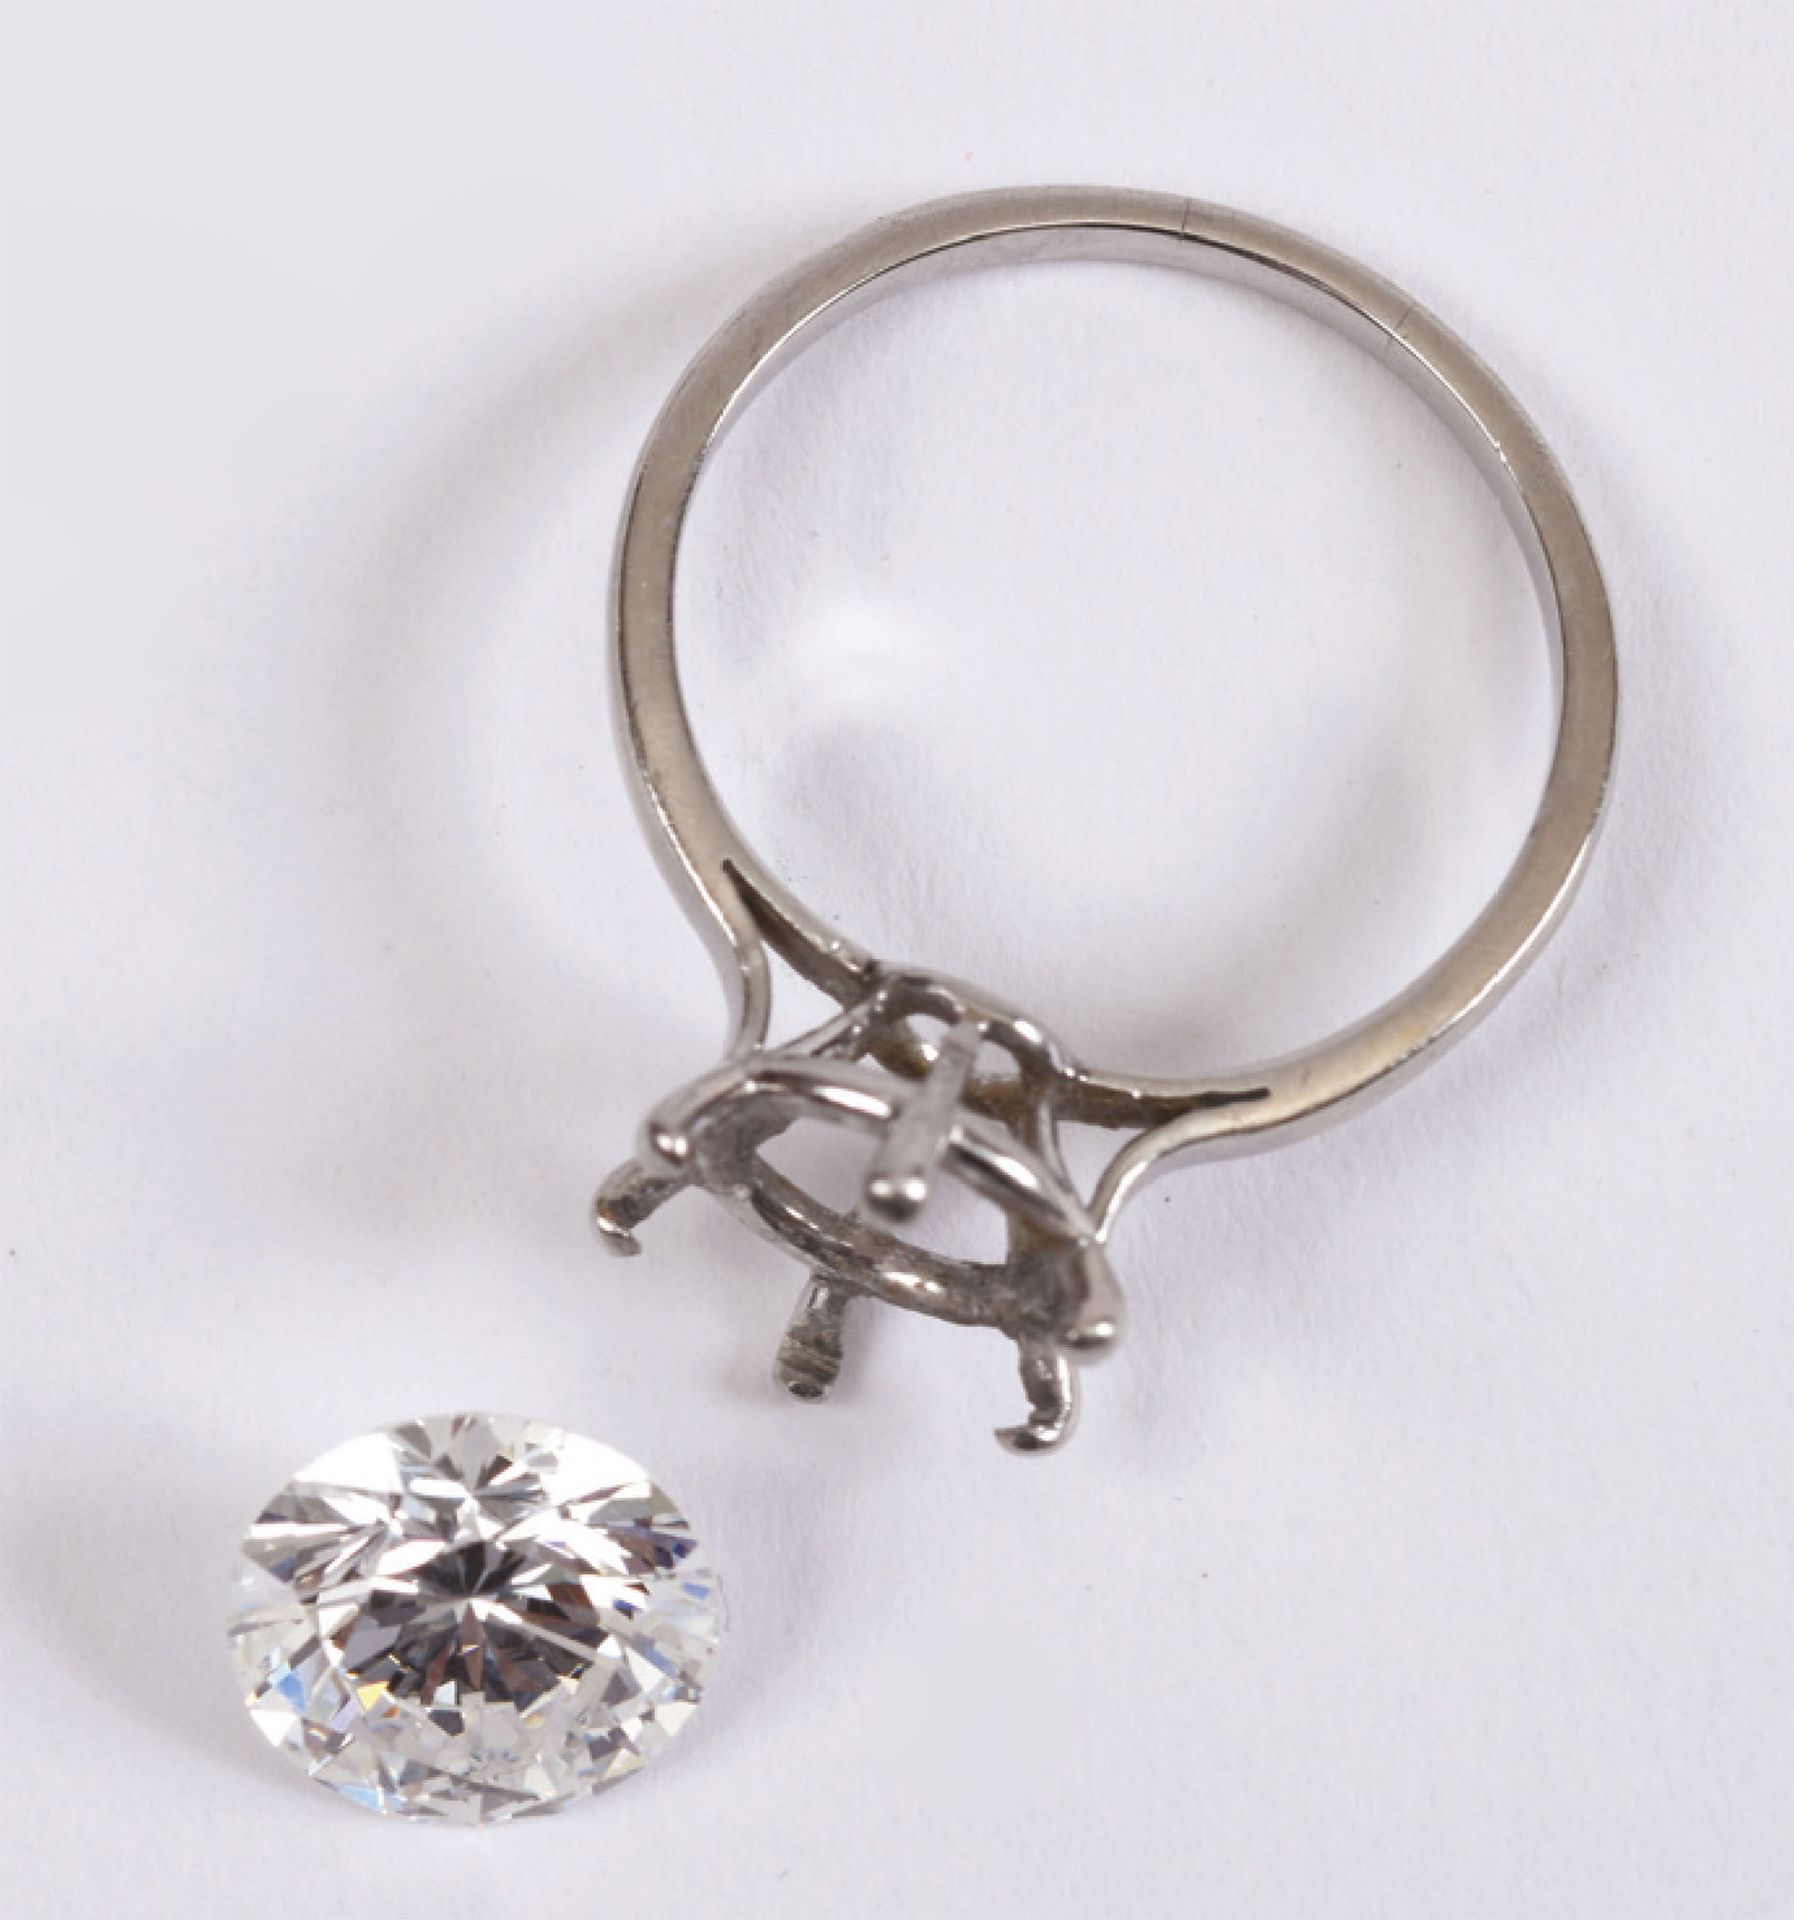 Null 戒指上镶嵌着铂金的单颗明亮型钻石。钻石的重量：3.01克拉。
伴随着LFG预认证，说明：。颜色E，
纯度Si1，低荧光。
毛重 : 4,2 g